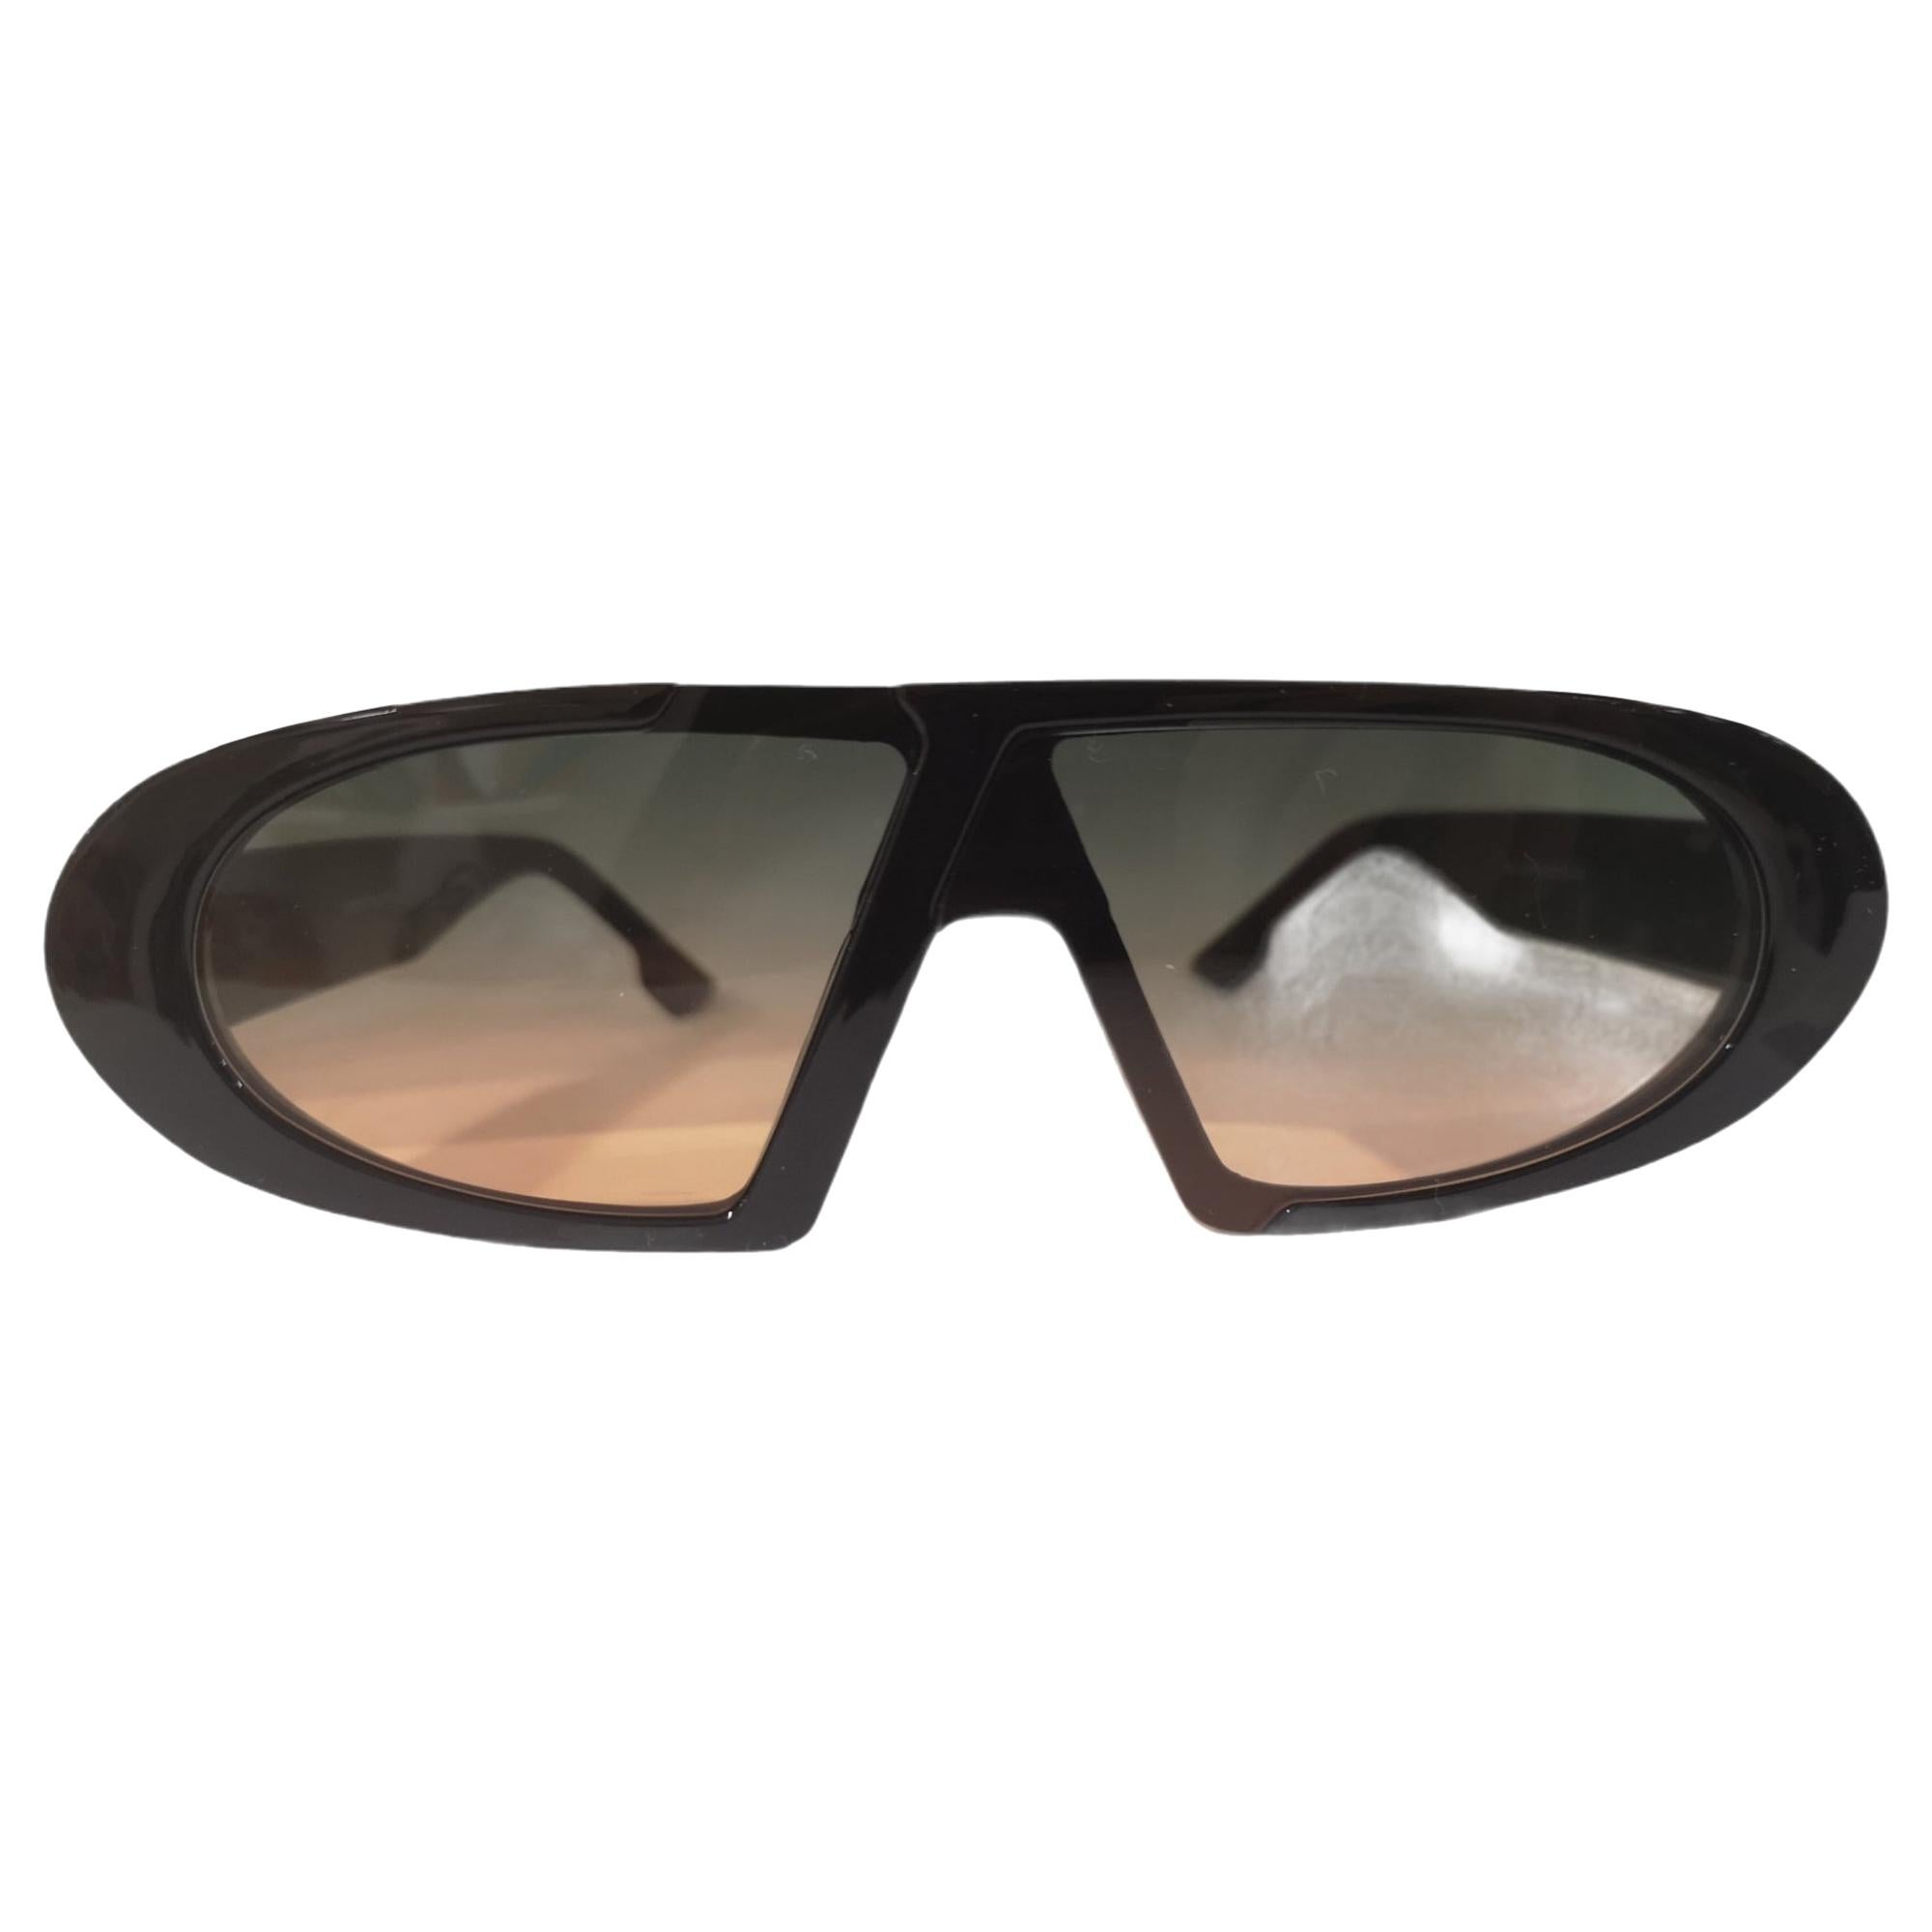 Black orange and green lens sunglasses NWOT